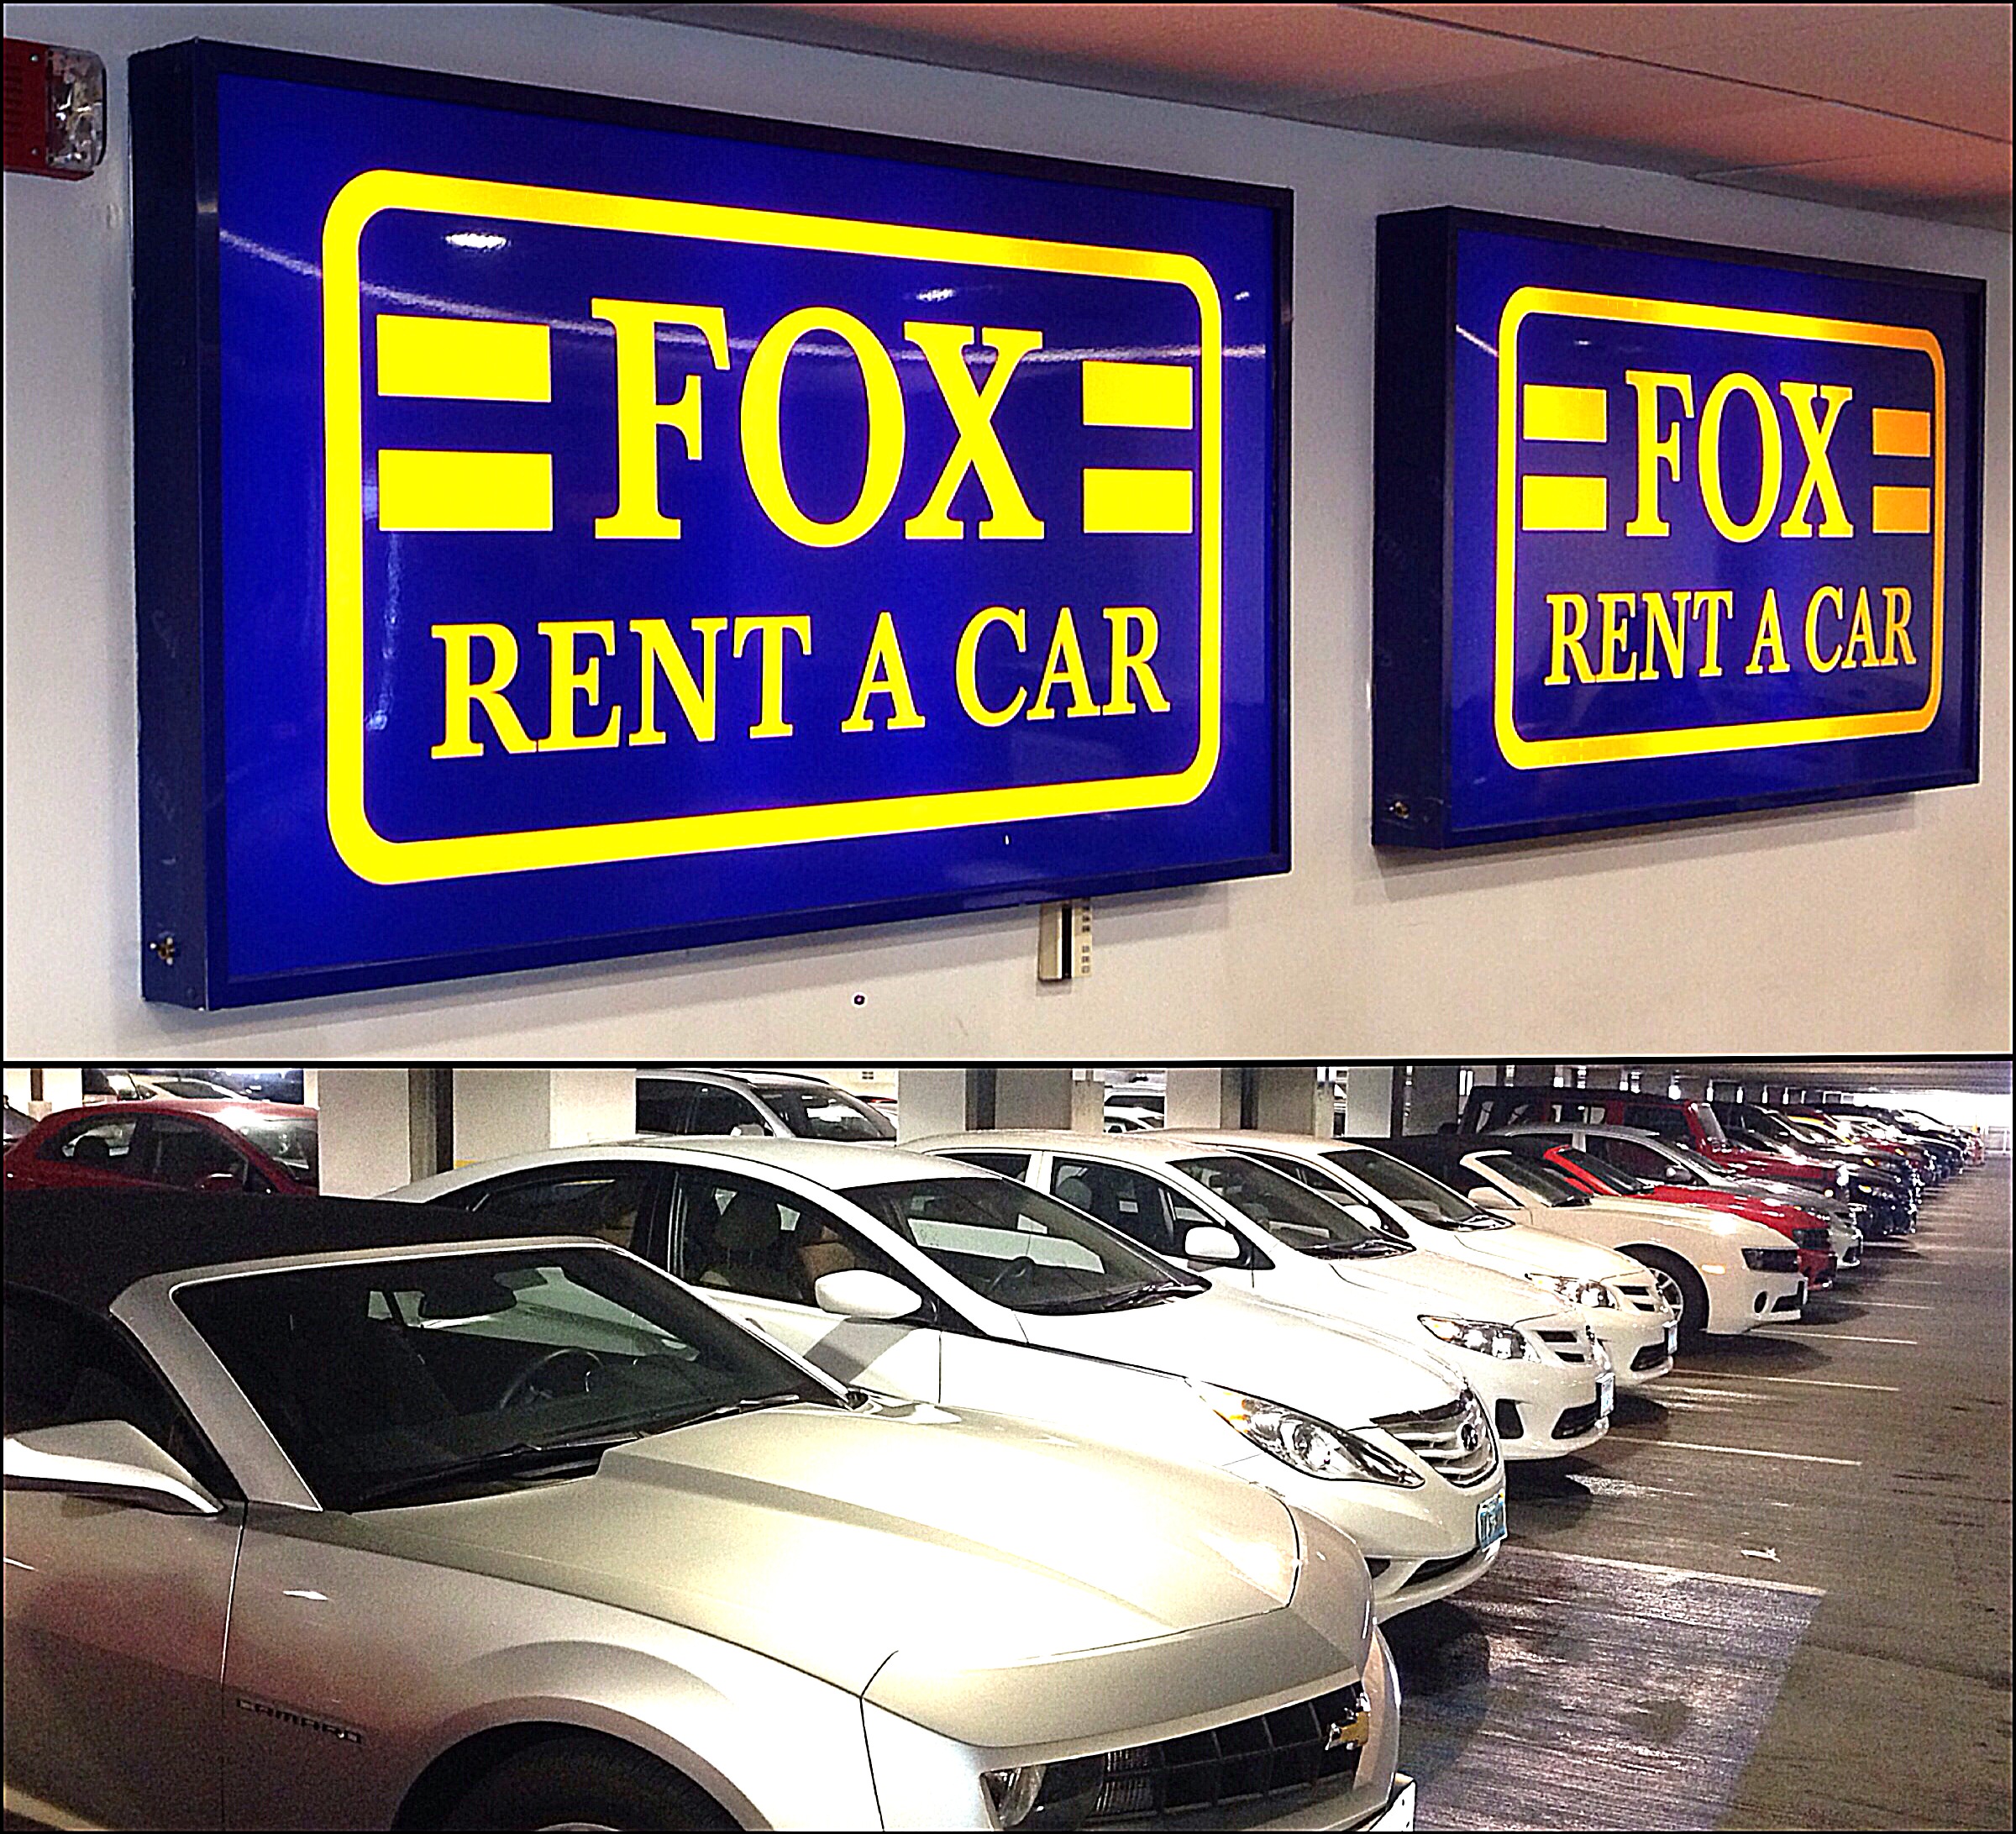 Fox Rent A Car Discounts, Coupons & Employee Discounts